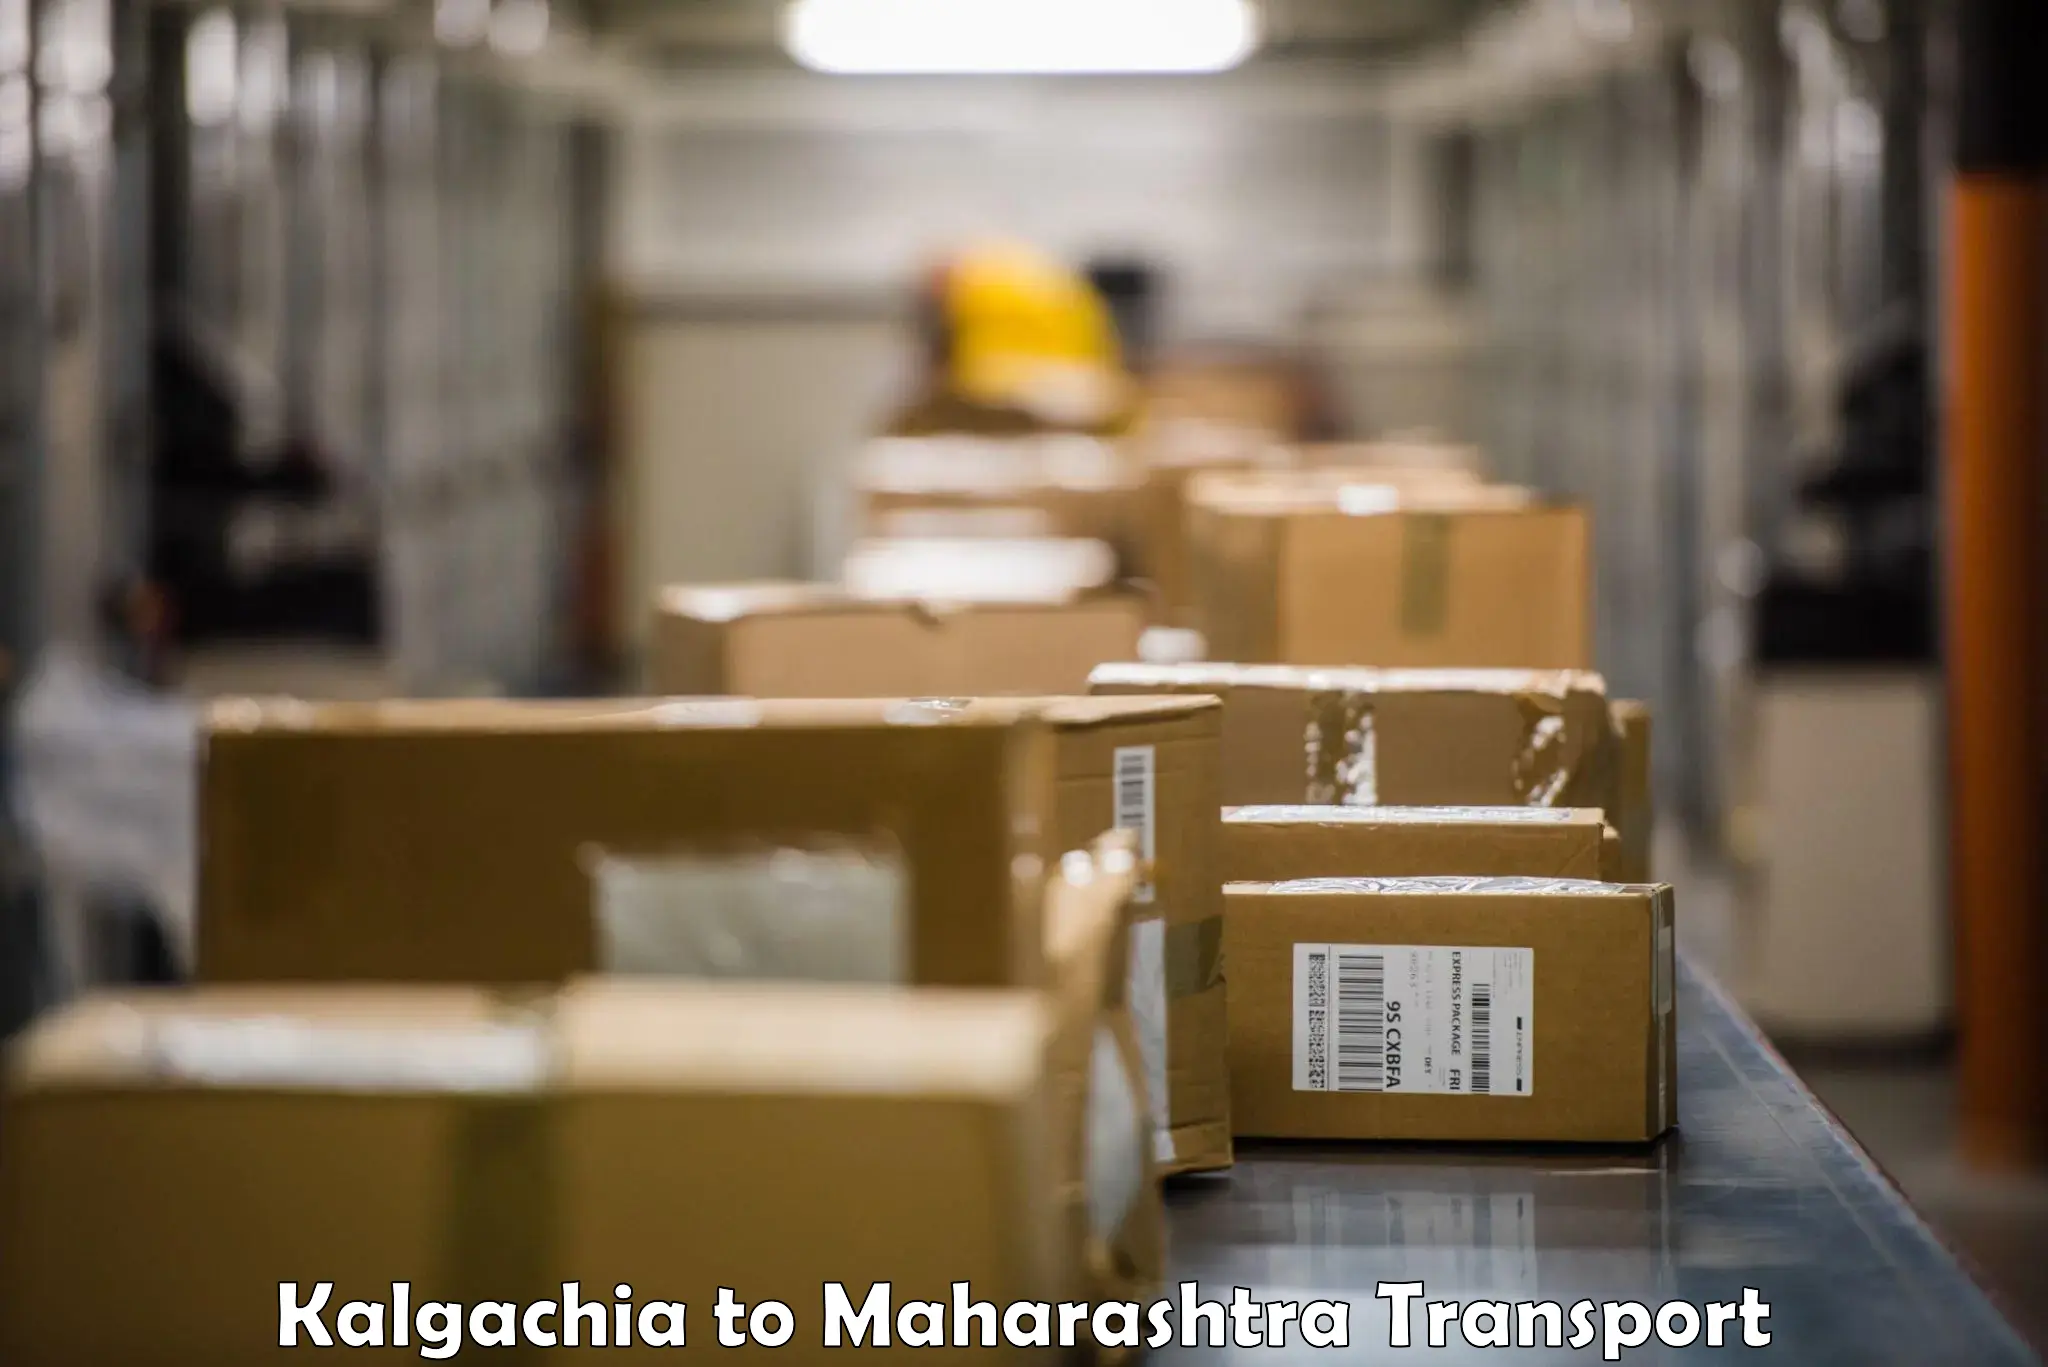 Daily parcel service transport in Kalgachia to Mumbai Port